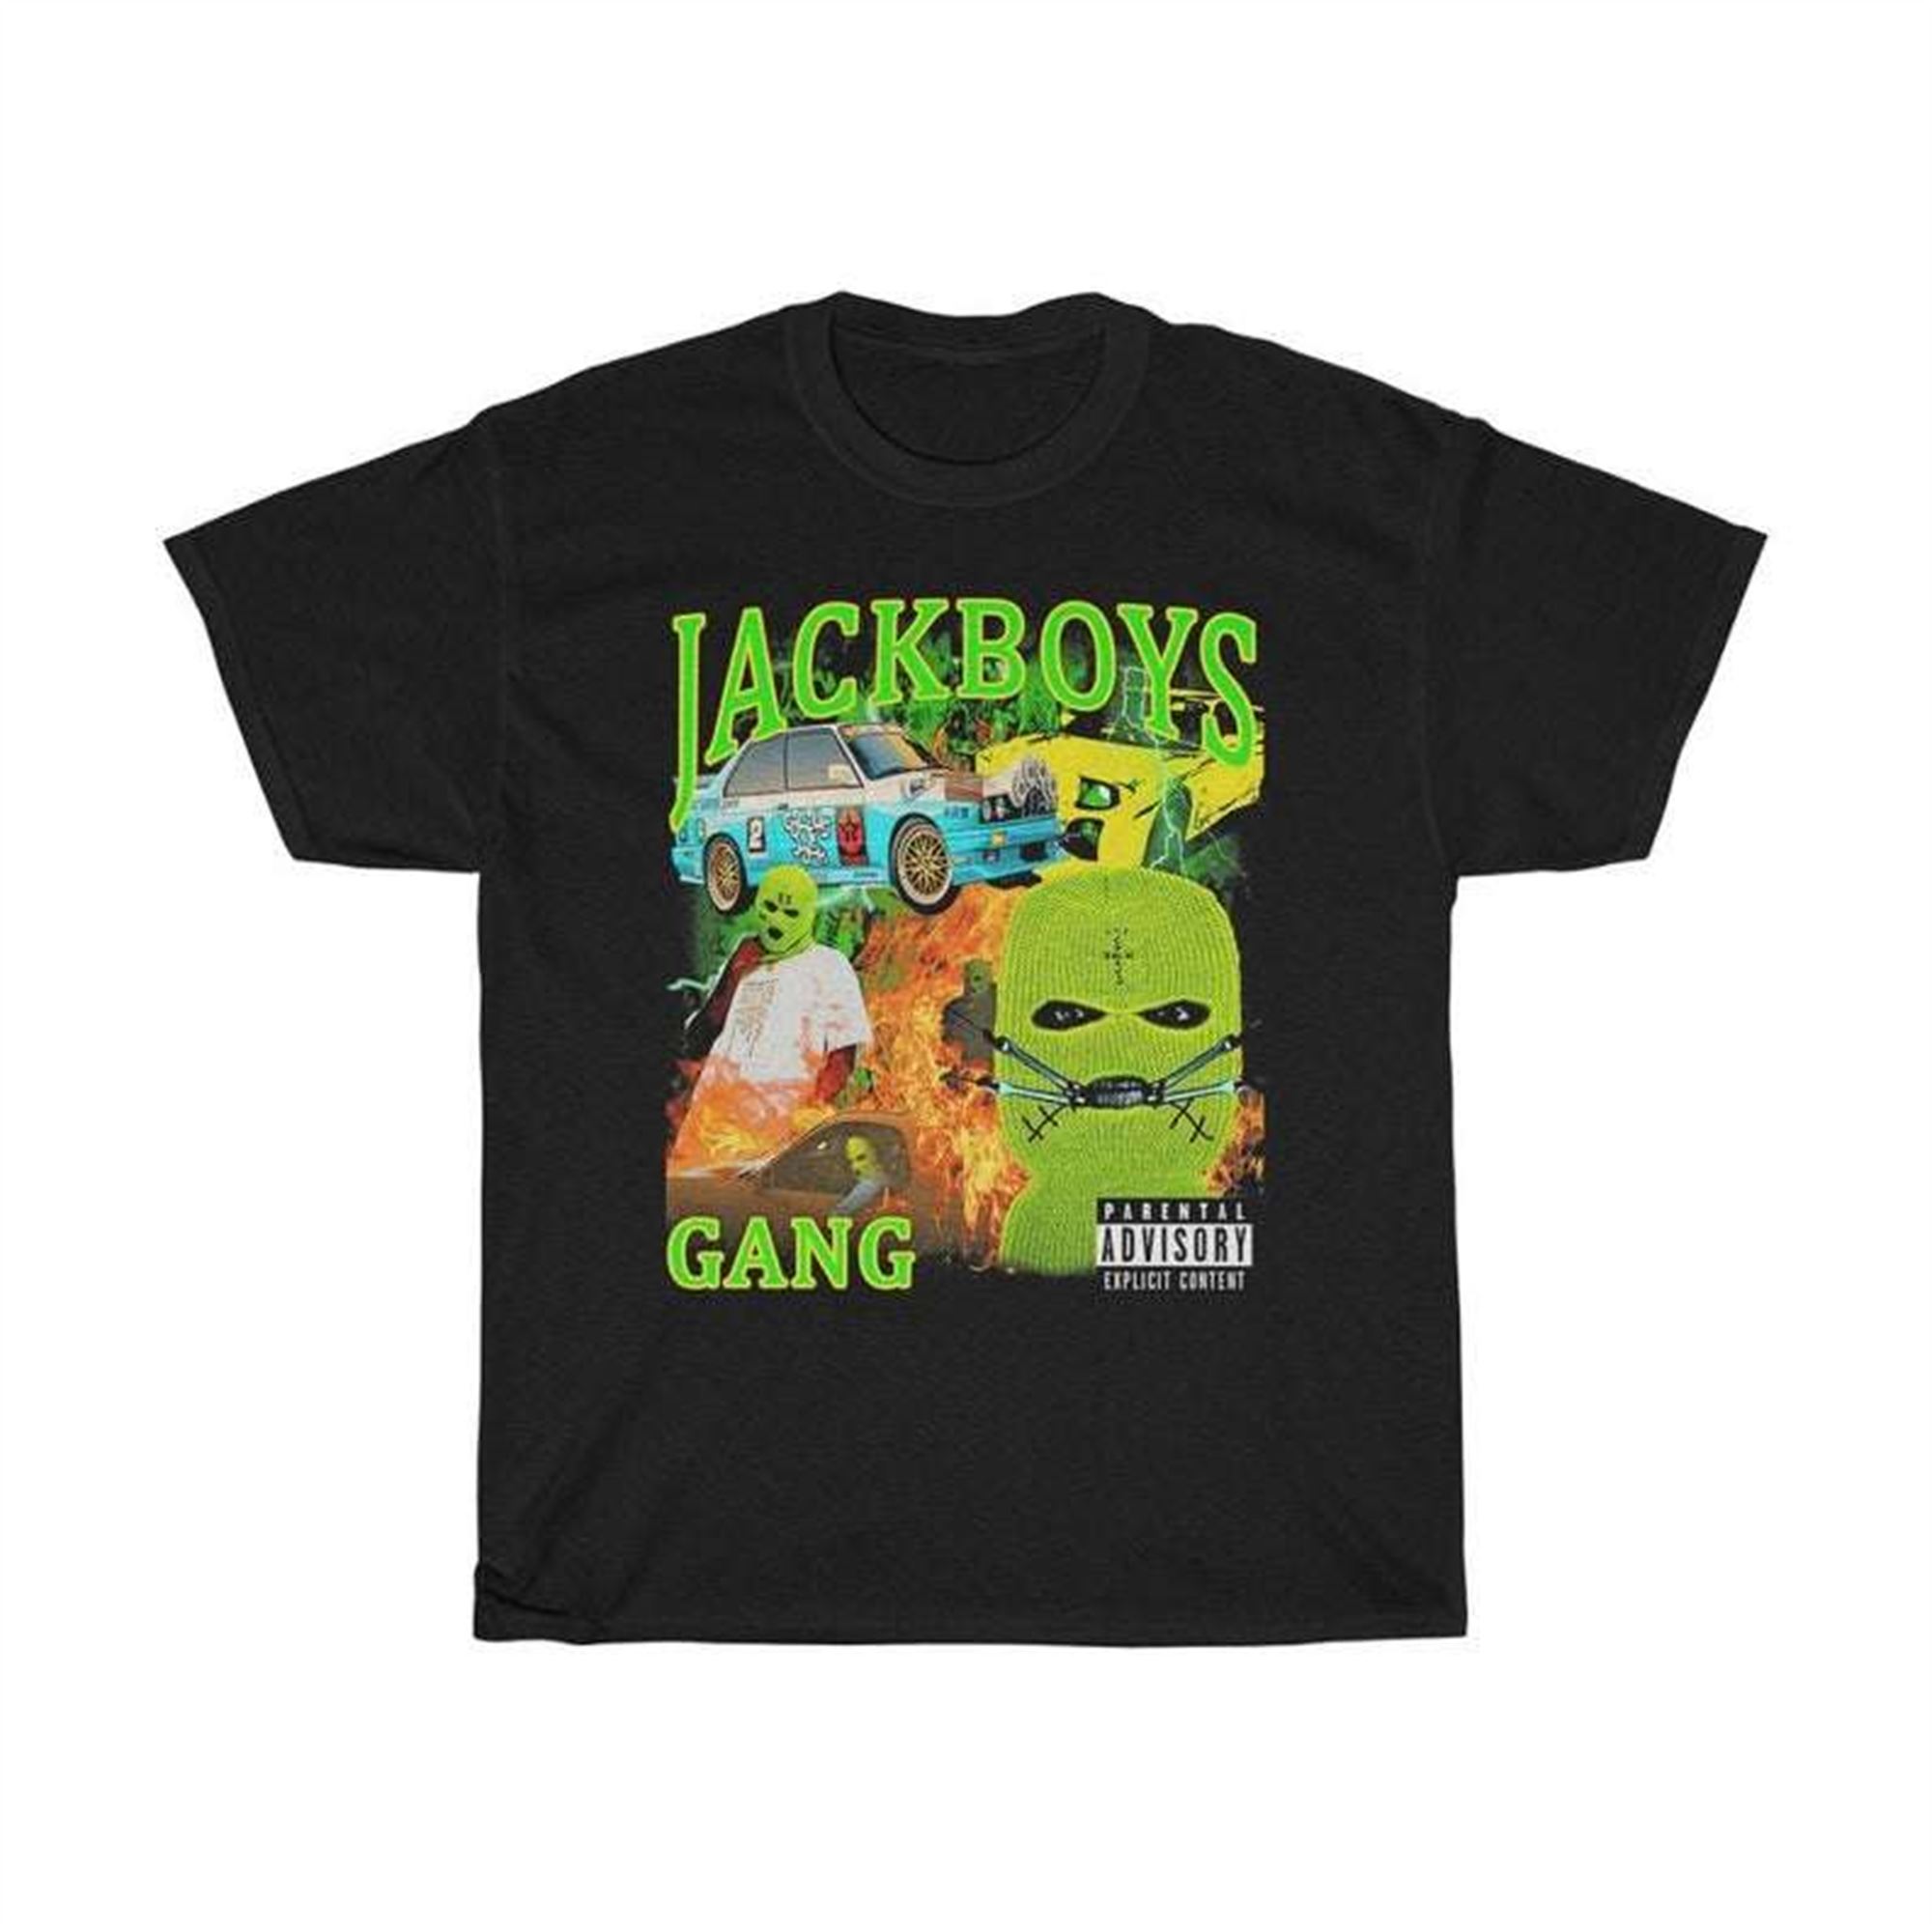 Jackboys Travis Scott T Shirt Full Size Up To 5xl